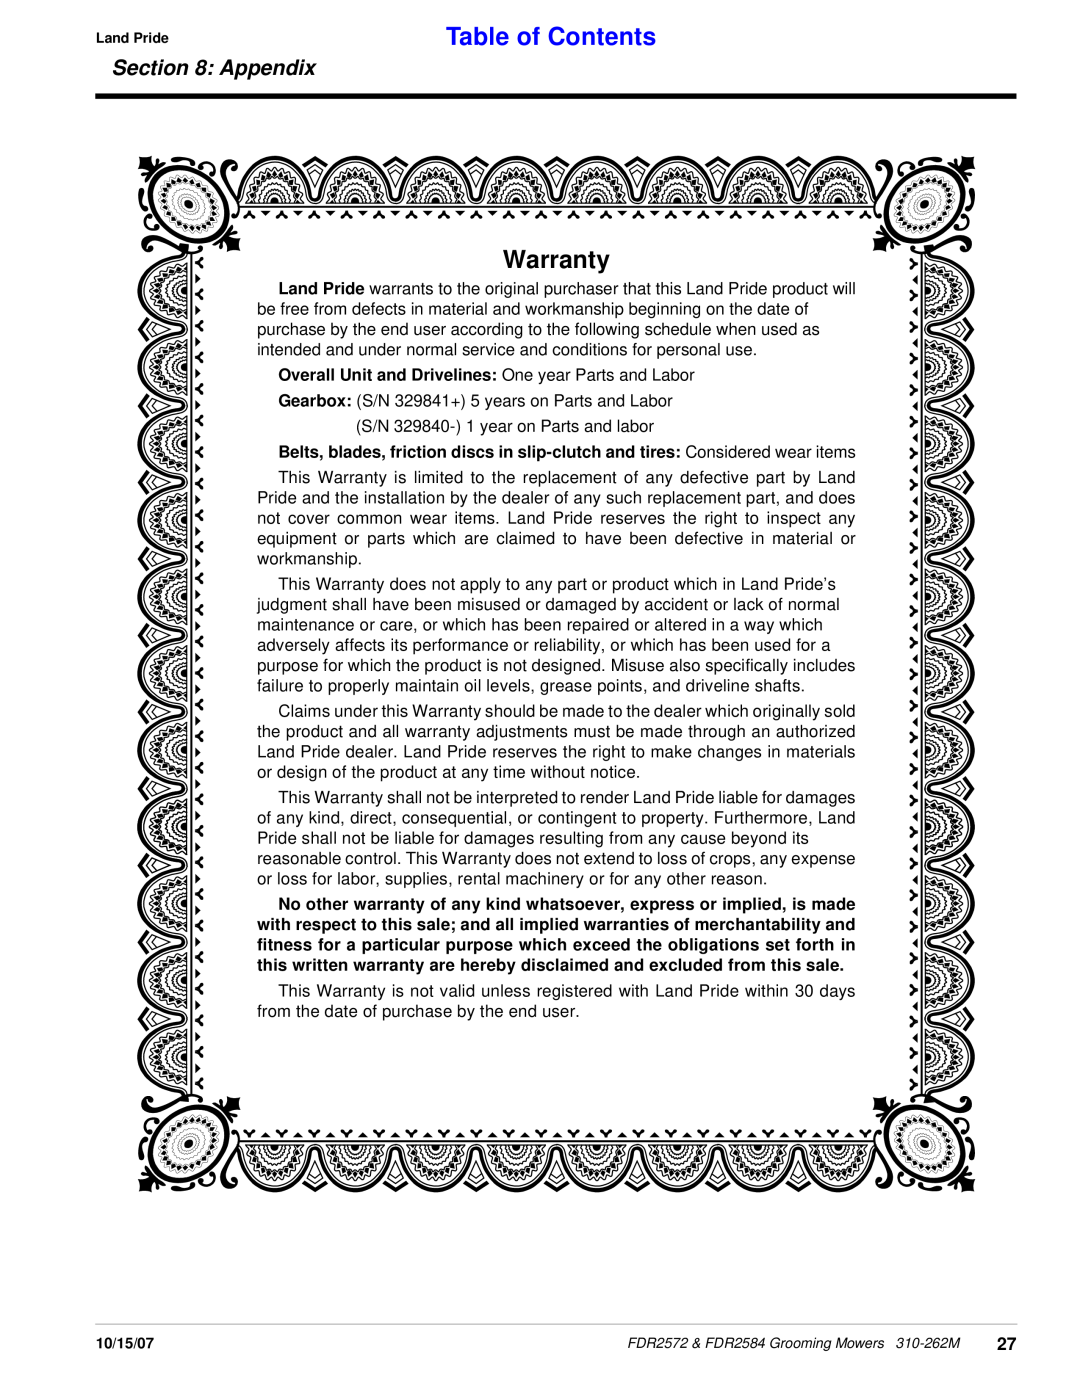 Land Pride FDR2584, FDR2572 manual Warranty, Table of Contents, Appendix 